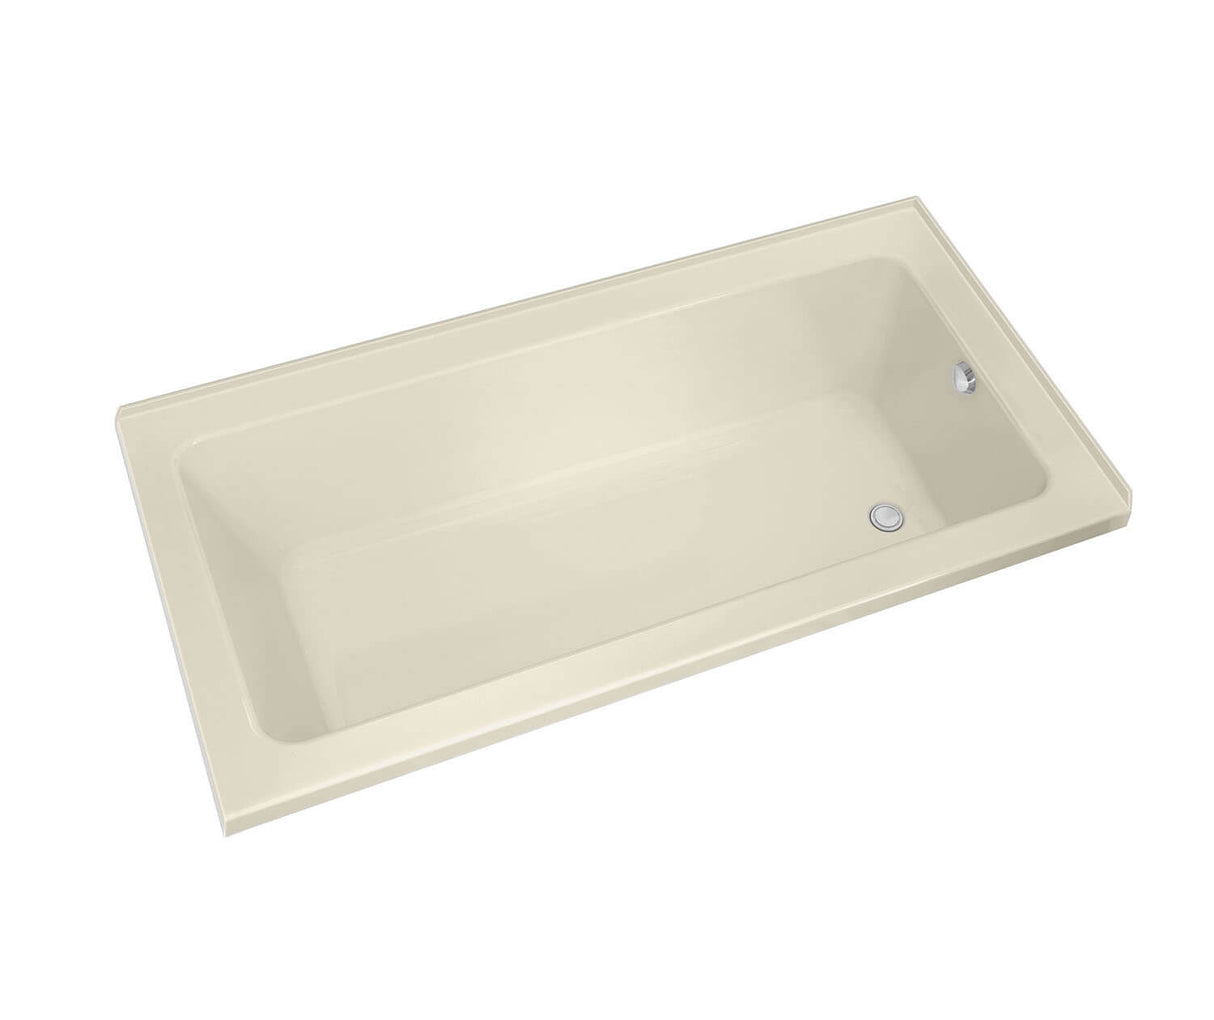 MAAX 106215-L-003-004 Pose 7242 IF Acrylic Corner Right Left-Hand Drain Whirlpool Bathtub in Bone